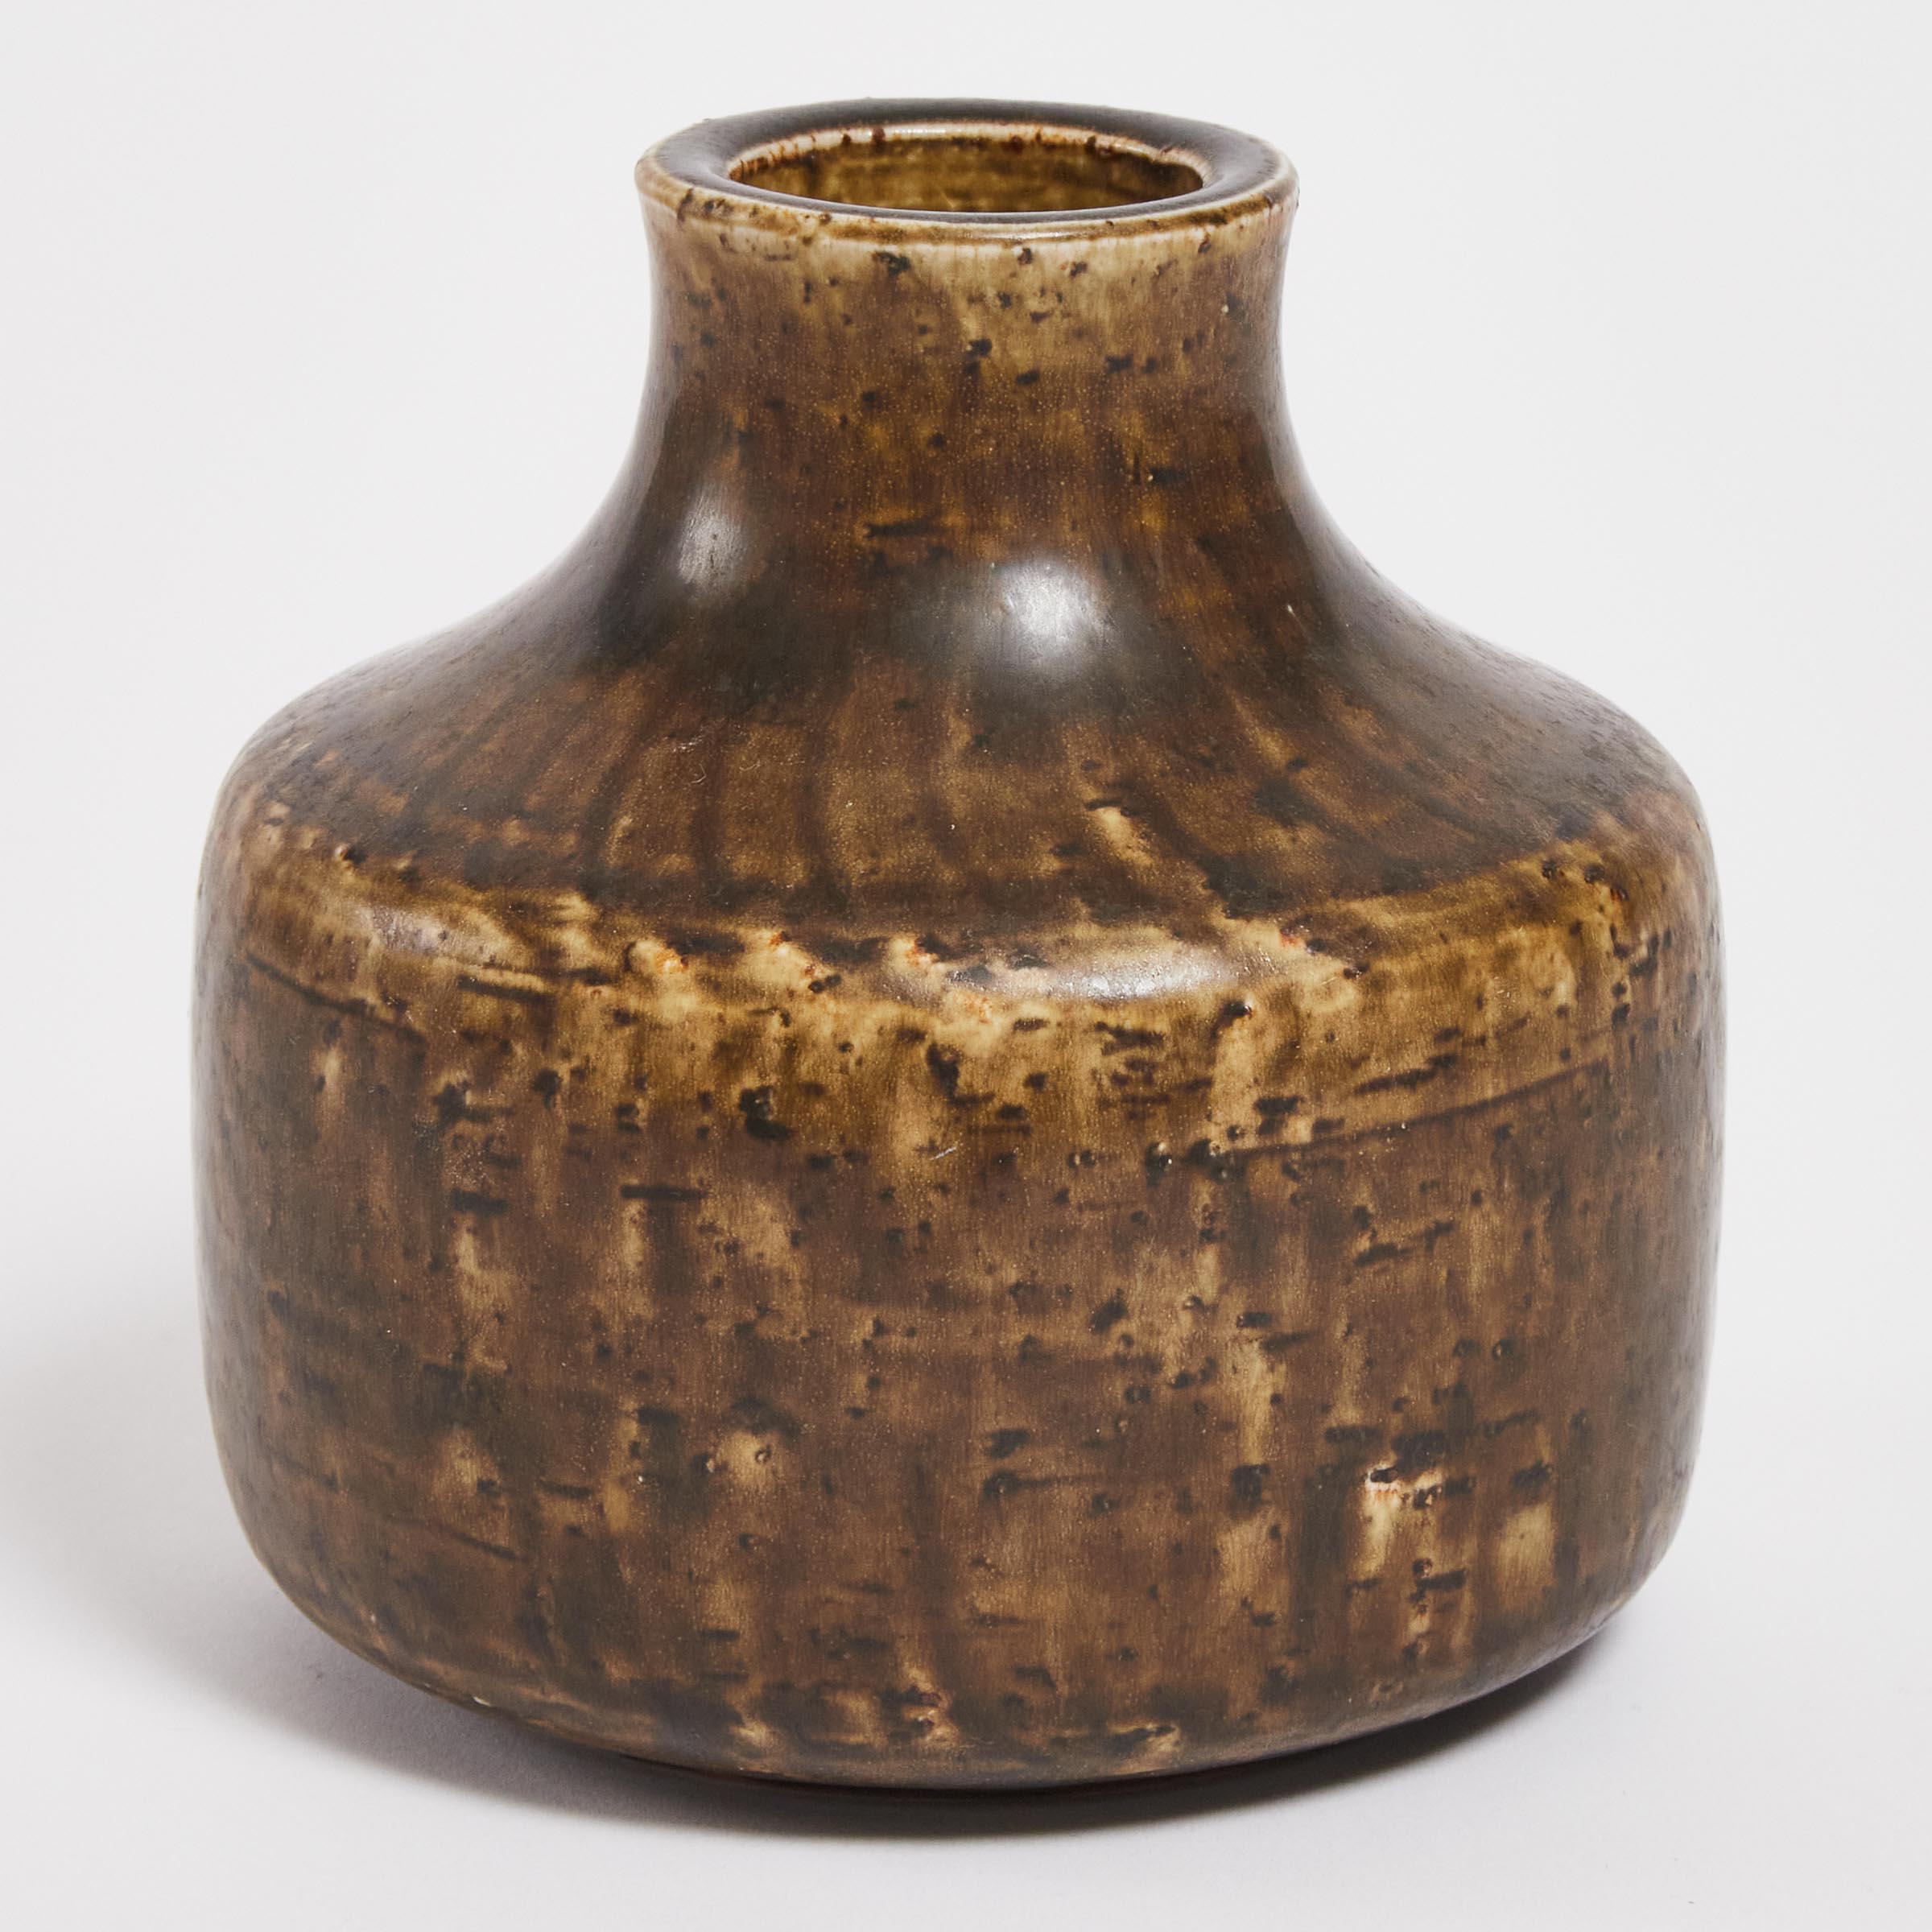 Edith Sonne Bruun (Danish, 1910-1993) for Saxbo, Vase, mid-20th century, height 5.3 in — 13.5 cm